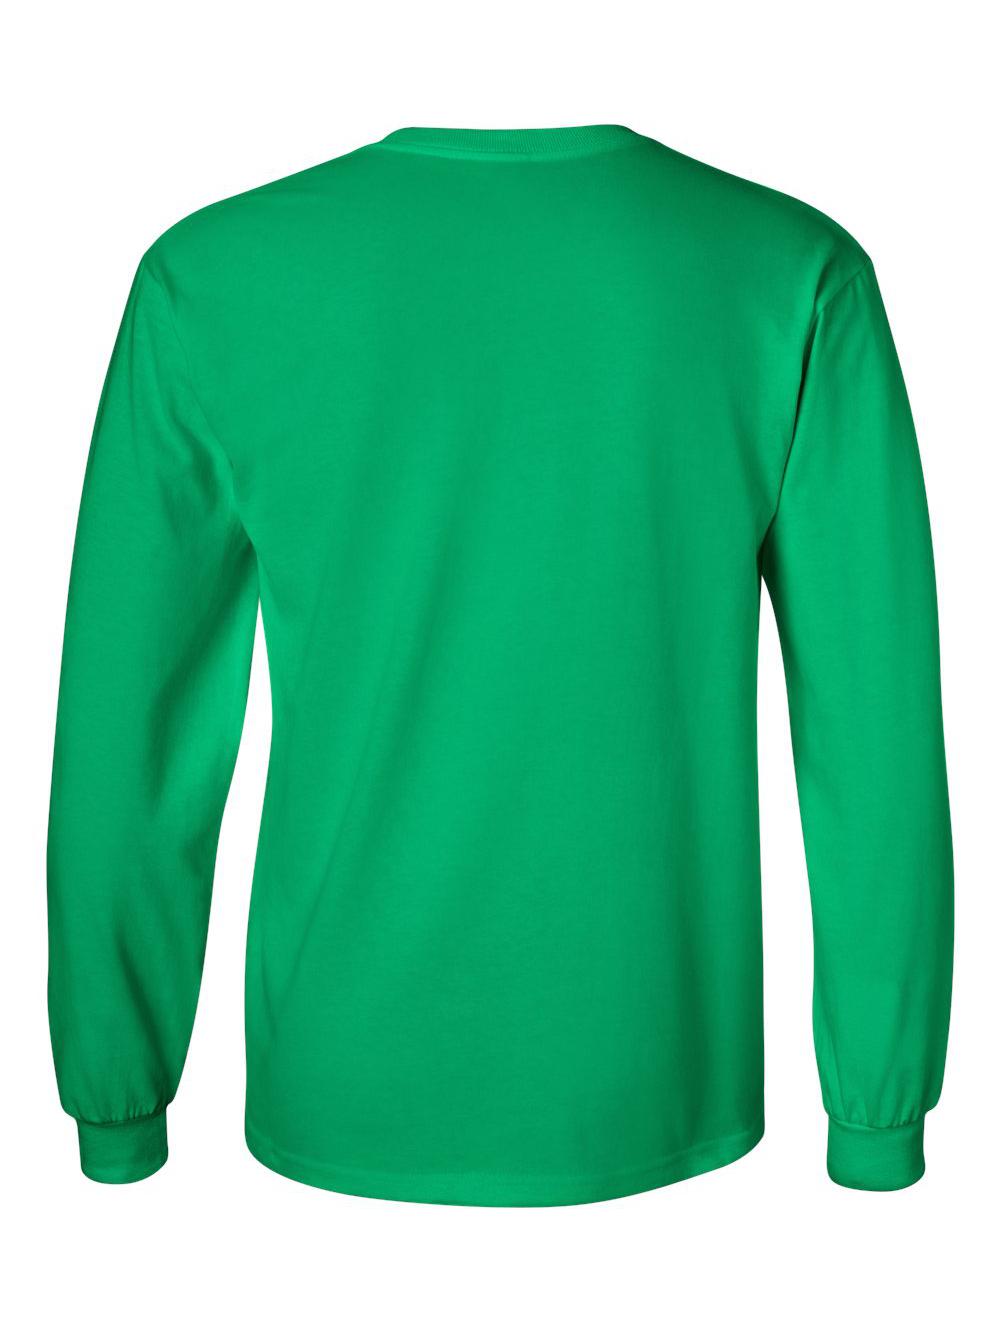 Gildan Unisex Ultra Cotton Long Sleeve T-Shirt - image 3 of 3